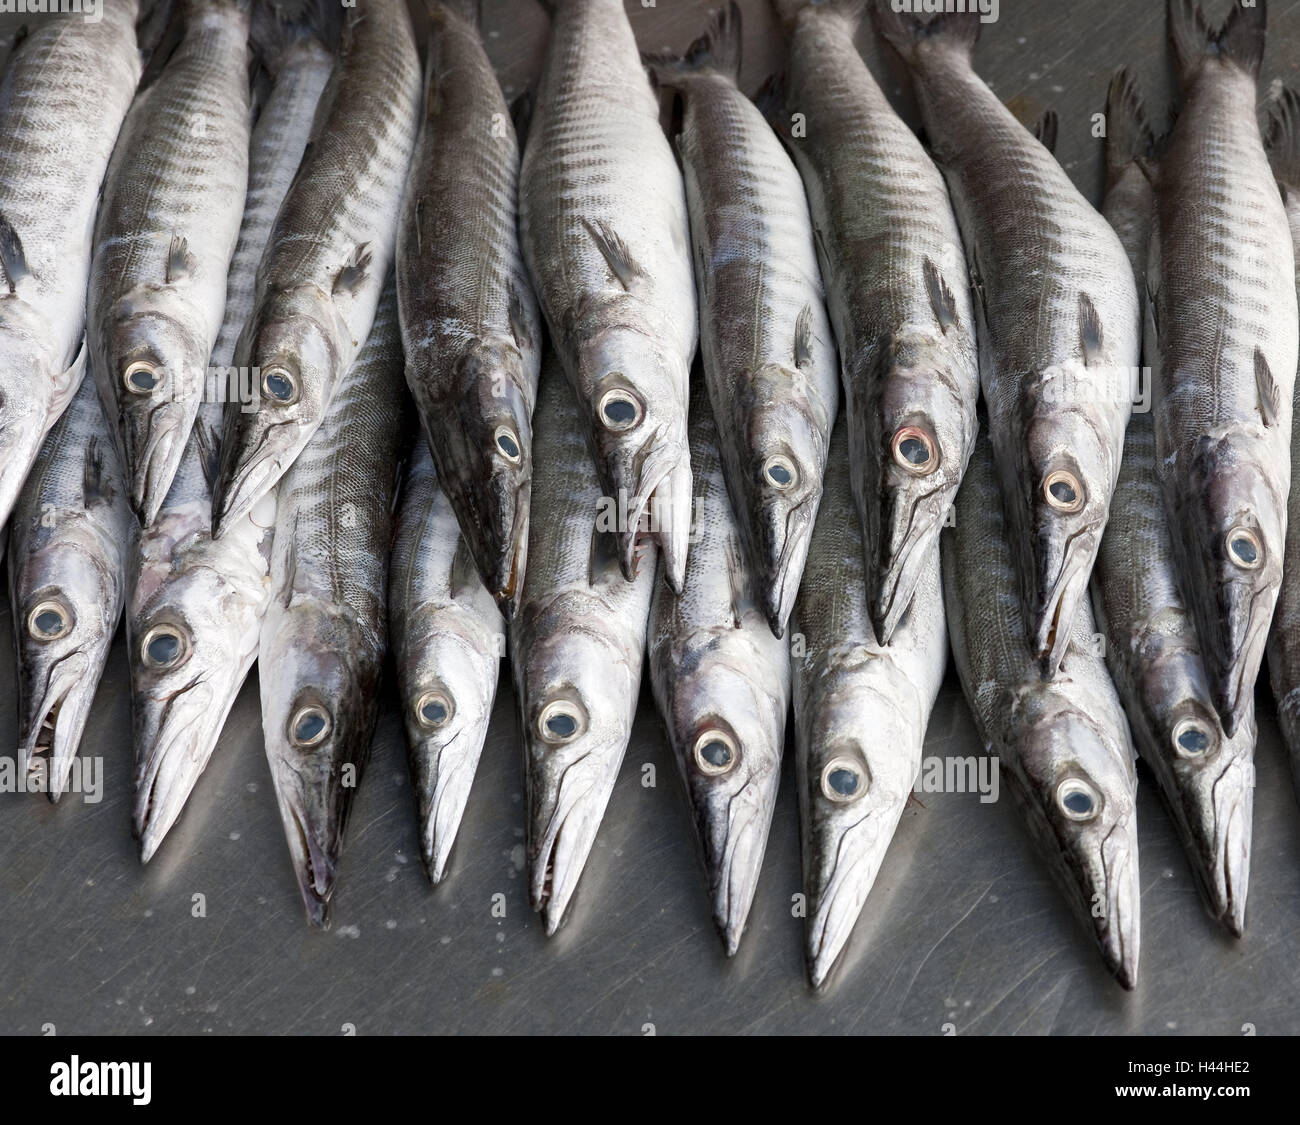 Sale of fish, development of sea gypsies, Rawai, Phuket, Stock Photo